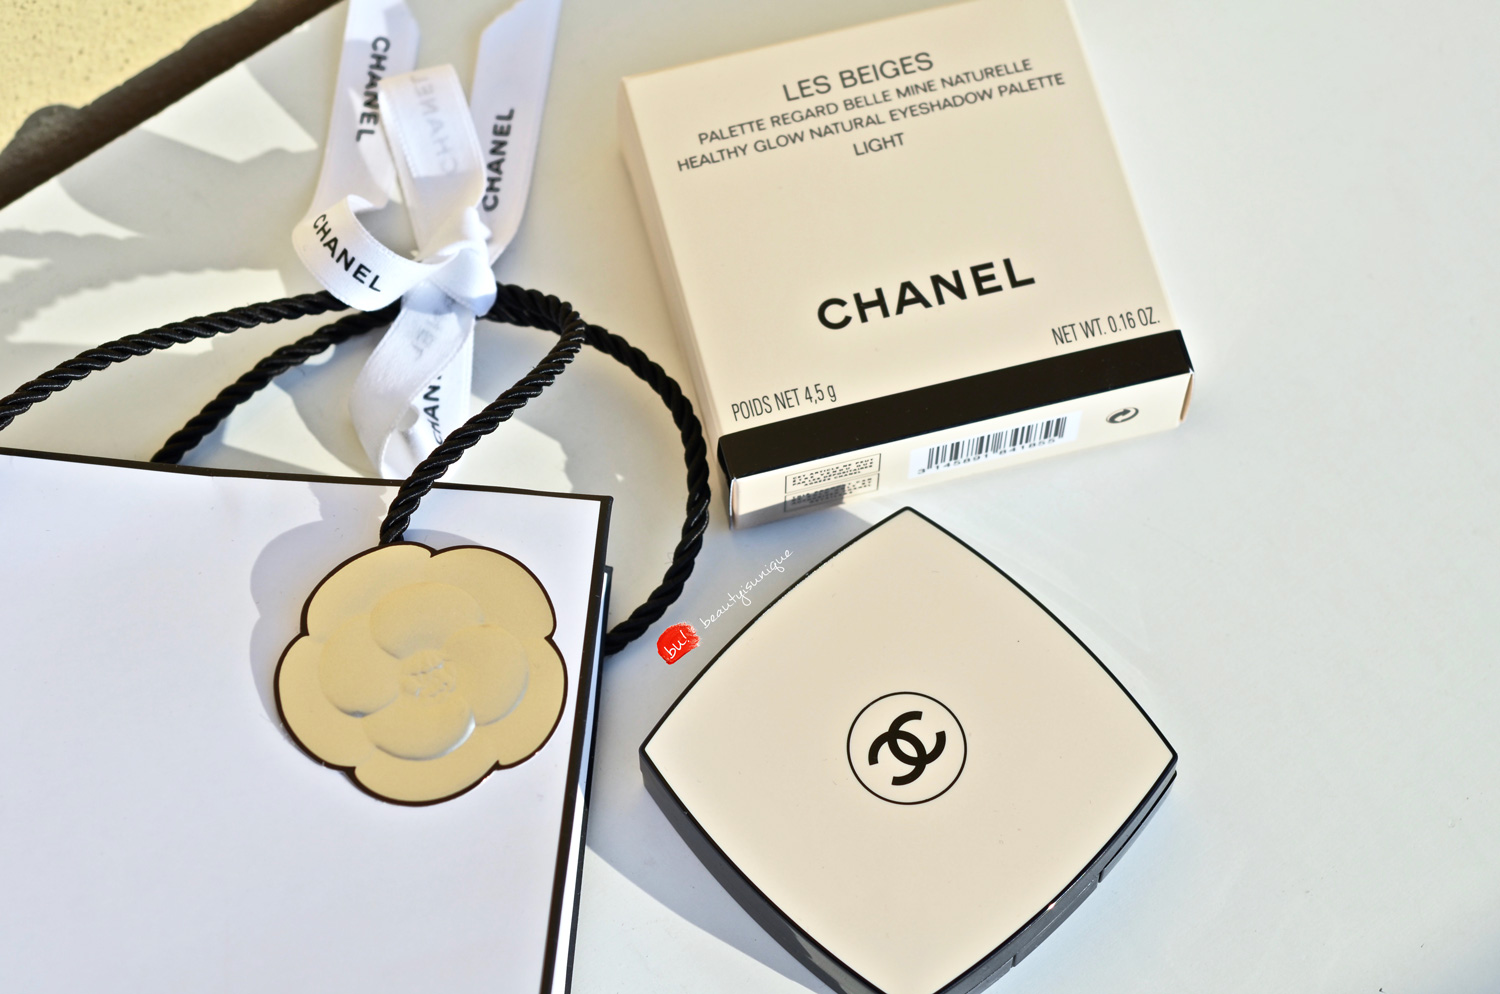 Chanel-les-beige-eyeshadow-palette-light